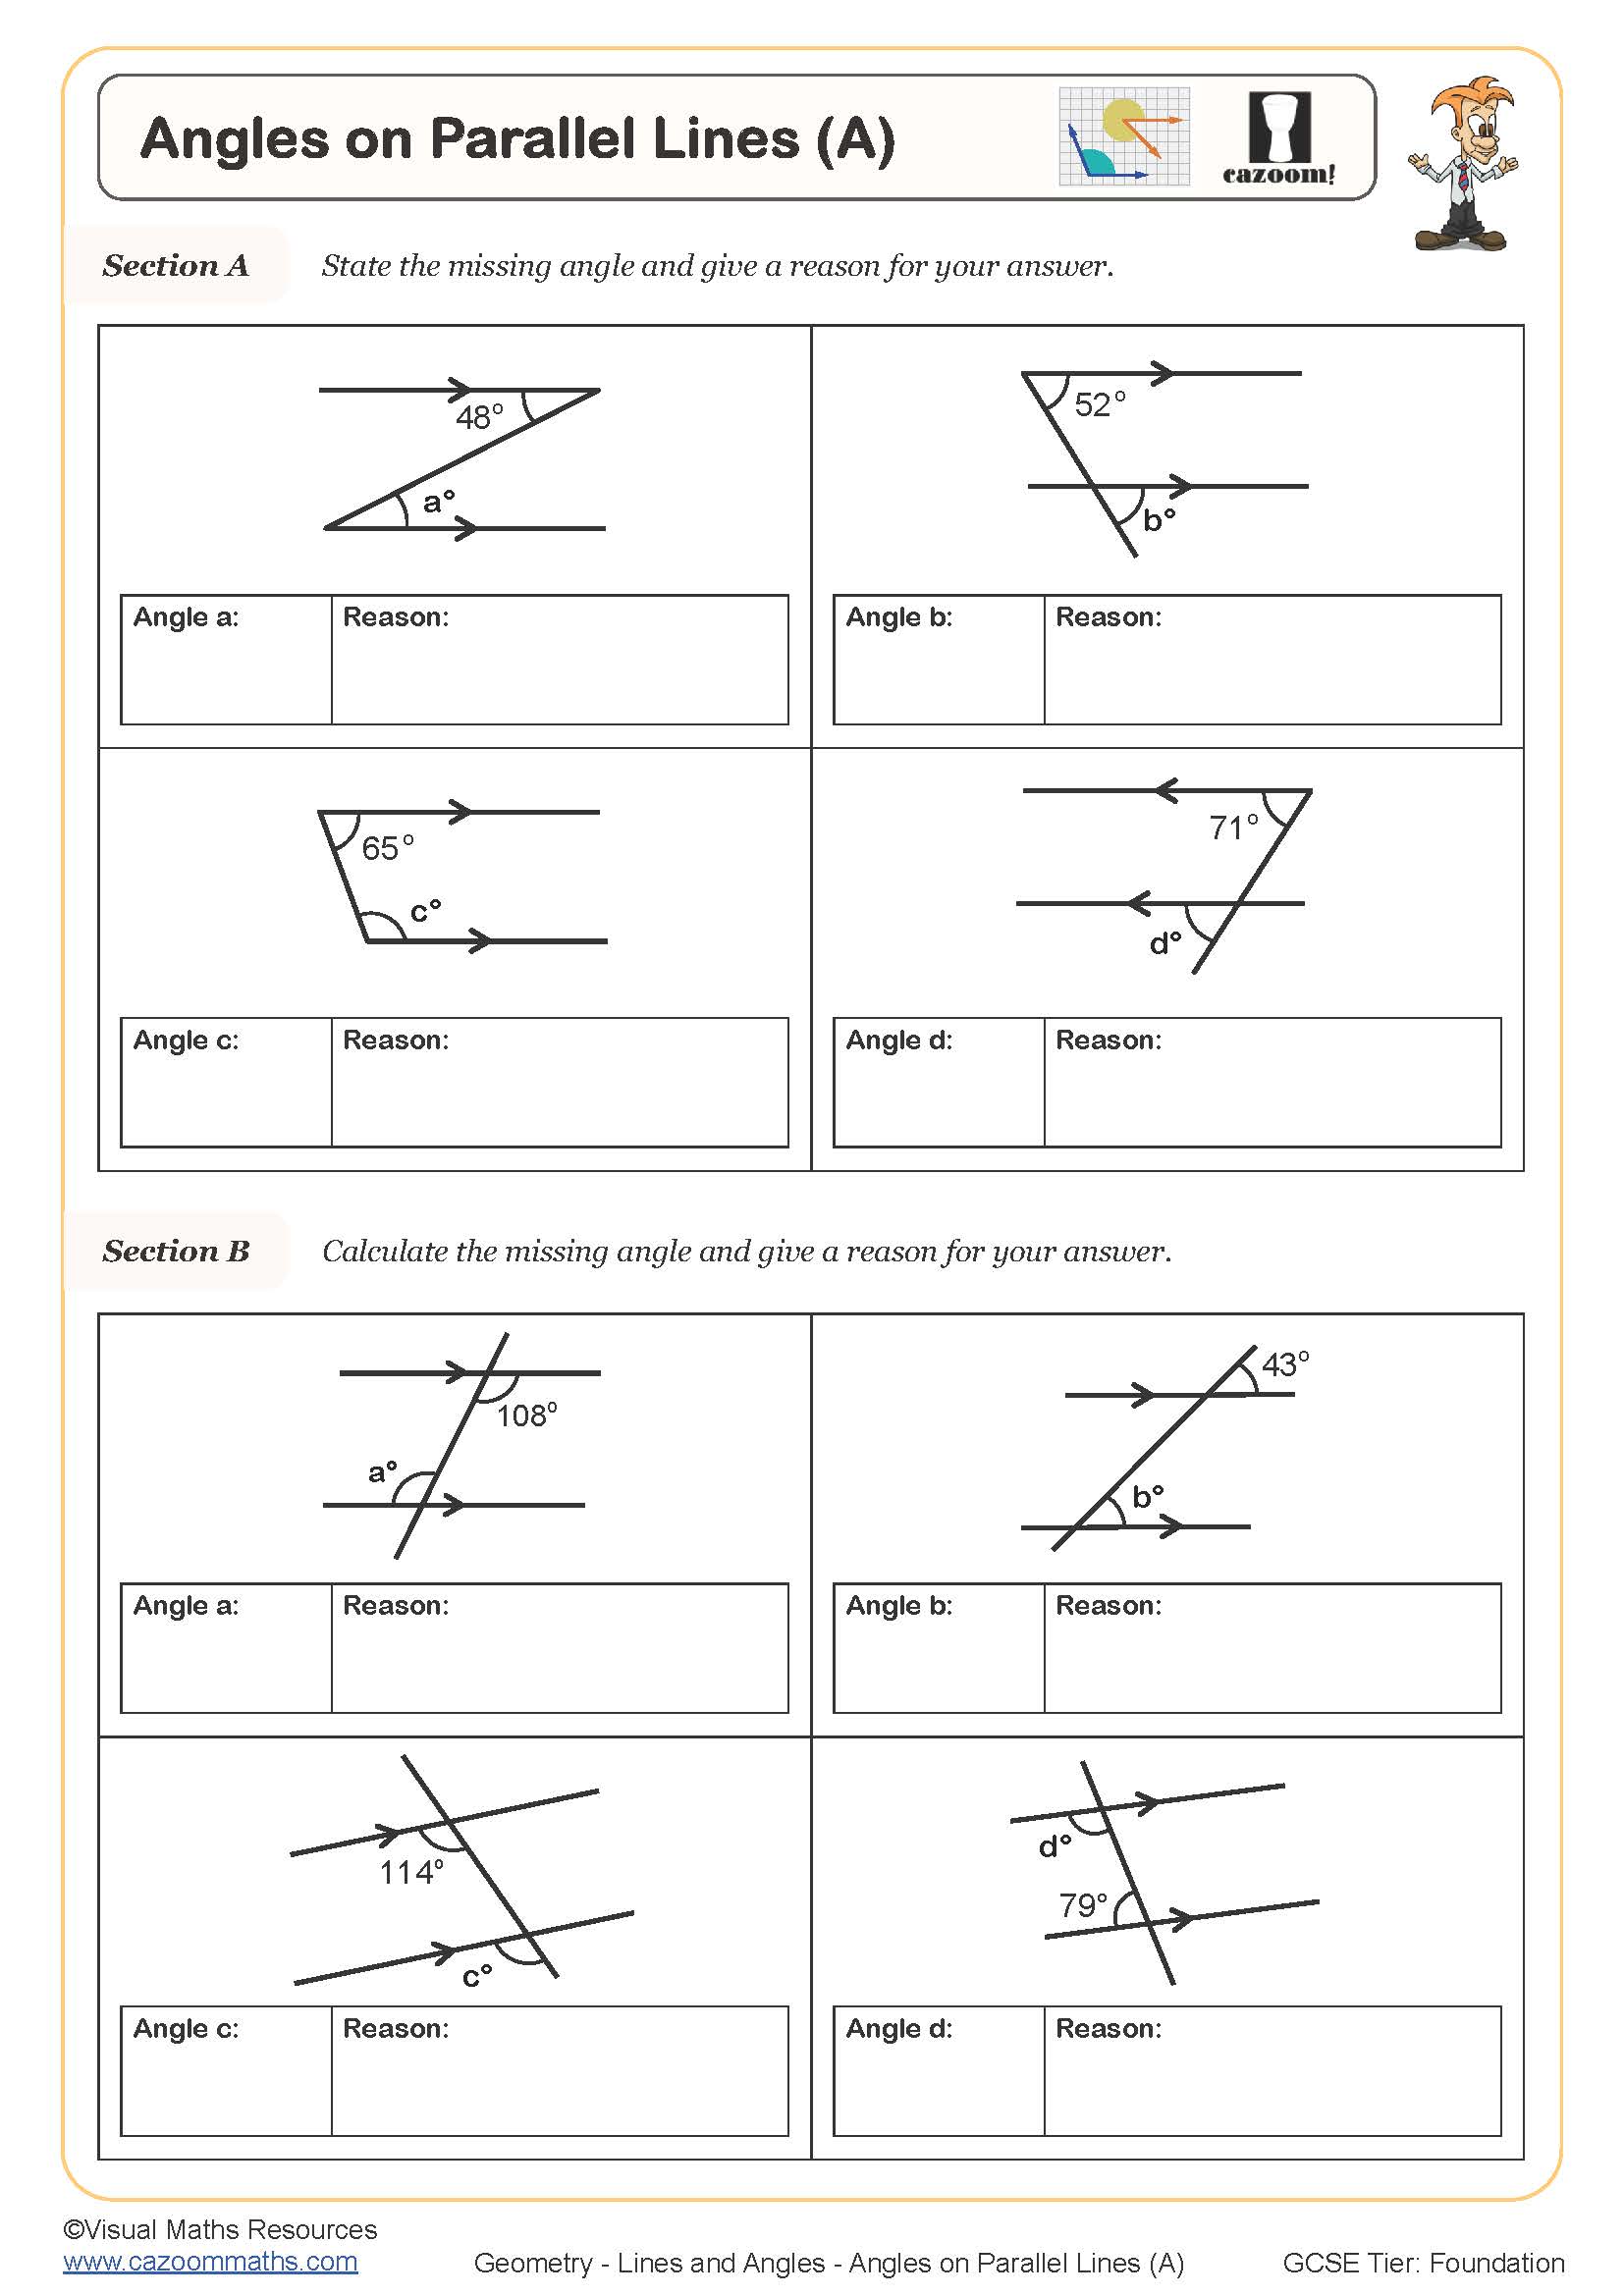 Angles on Parallel Lines KS3 Maths Worksheet